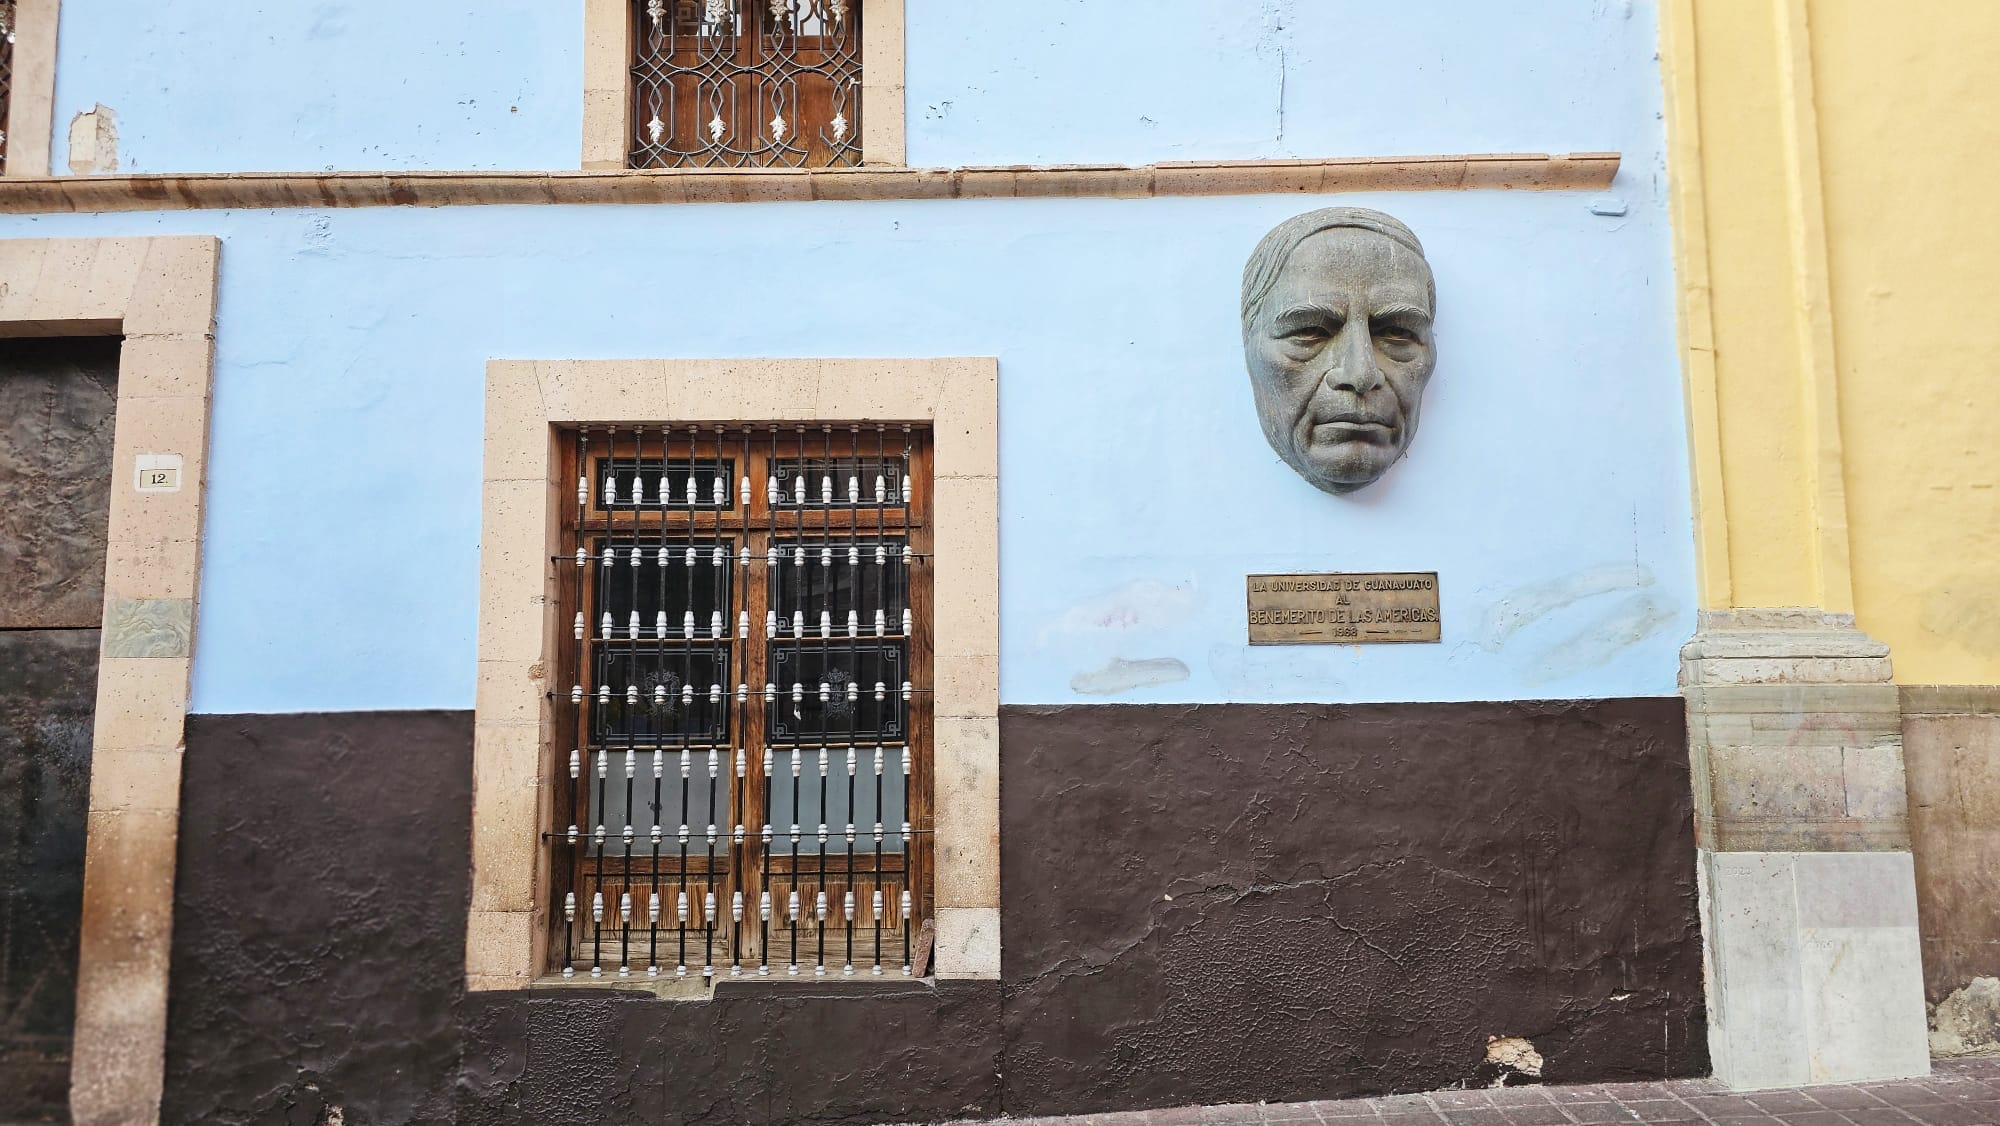 should you visit Guanajuato city or SMA?